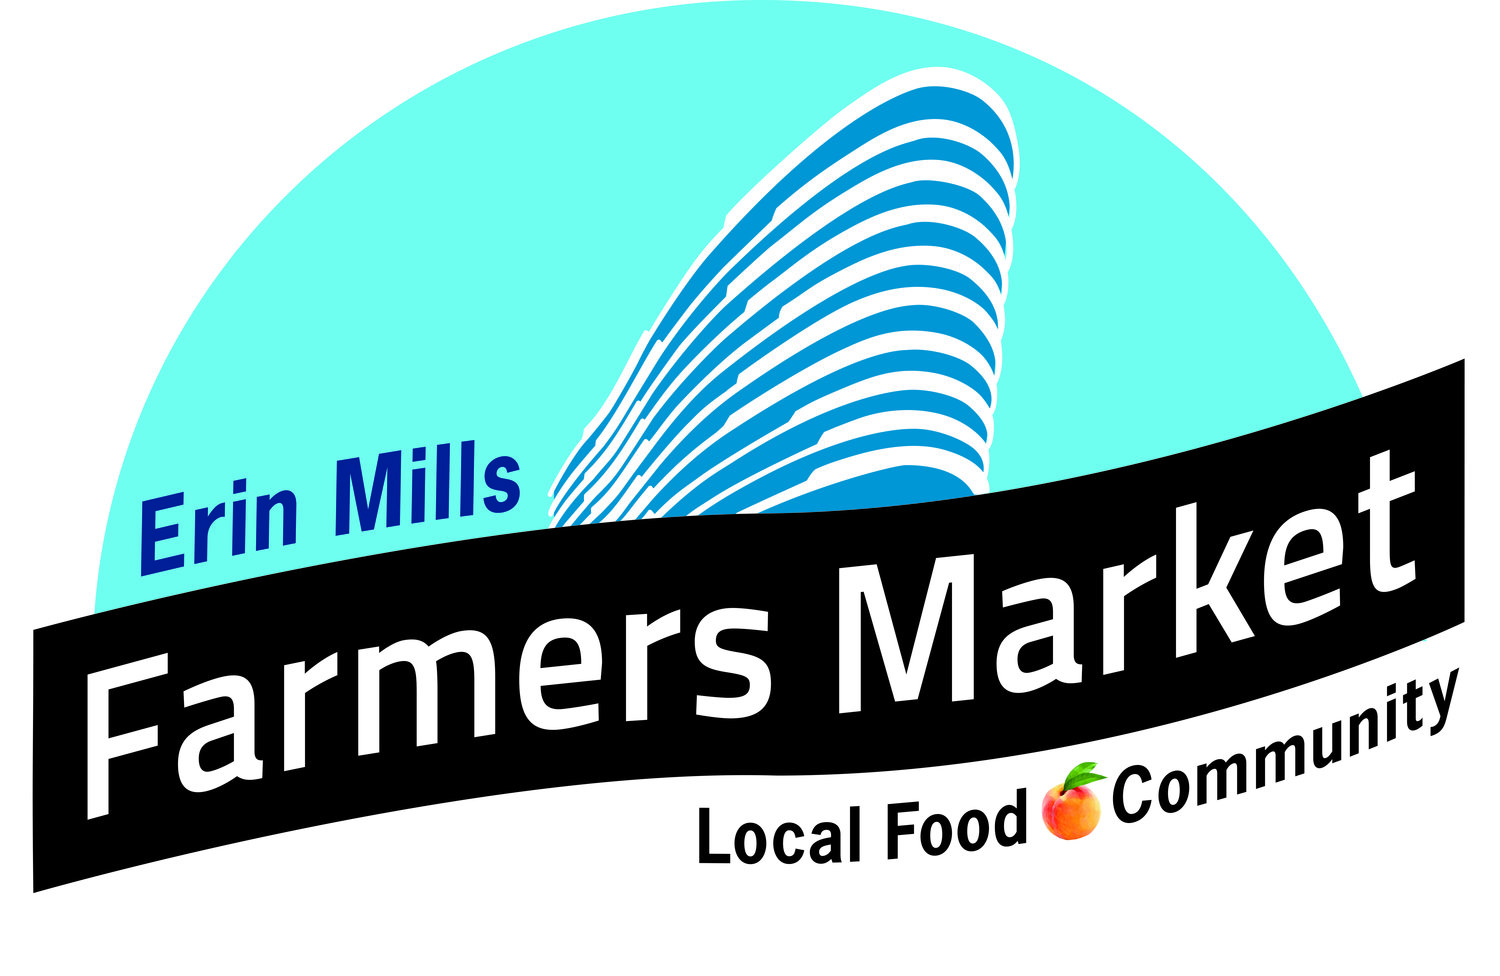 Erin Mills Farmers Market